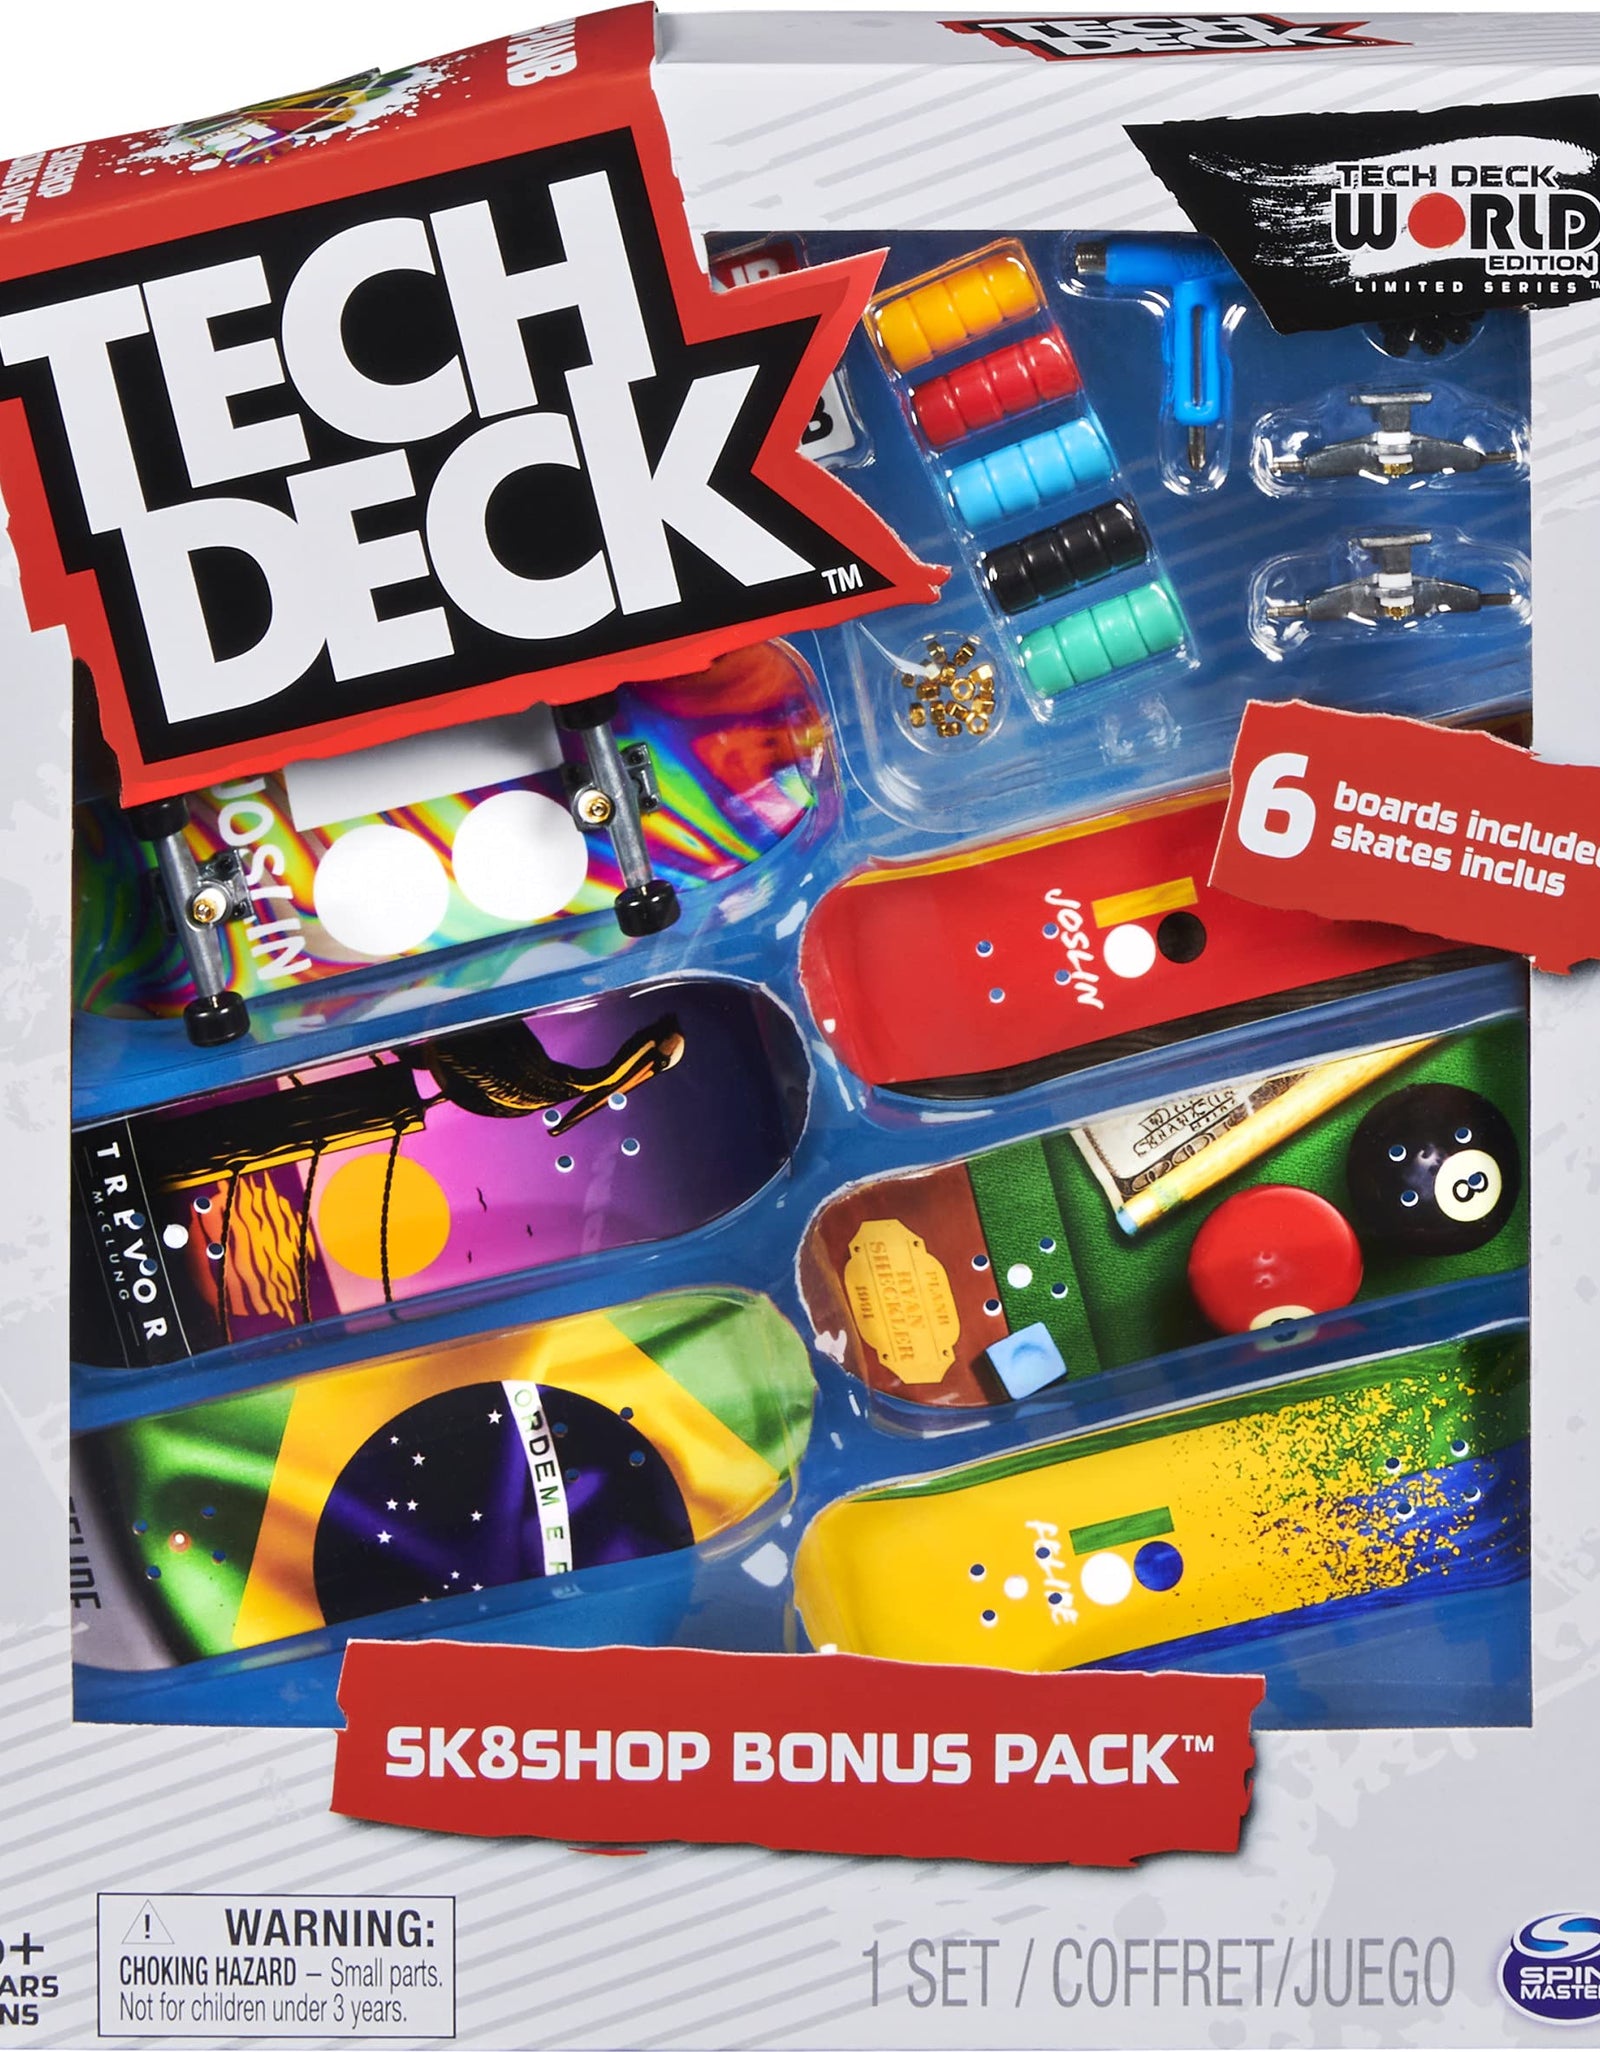 TECH DECK - Sk8shop Bonus Pack (Styles Vary)